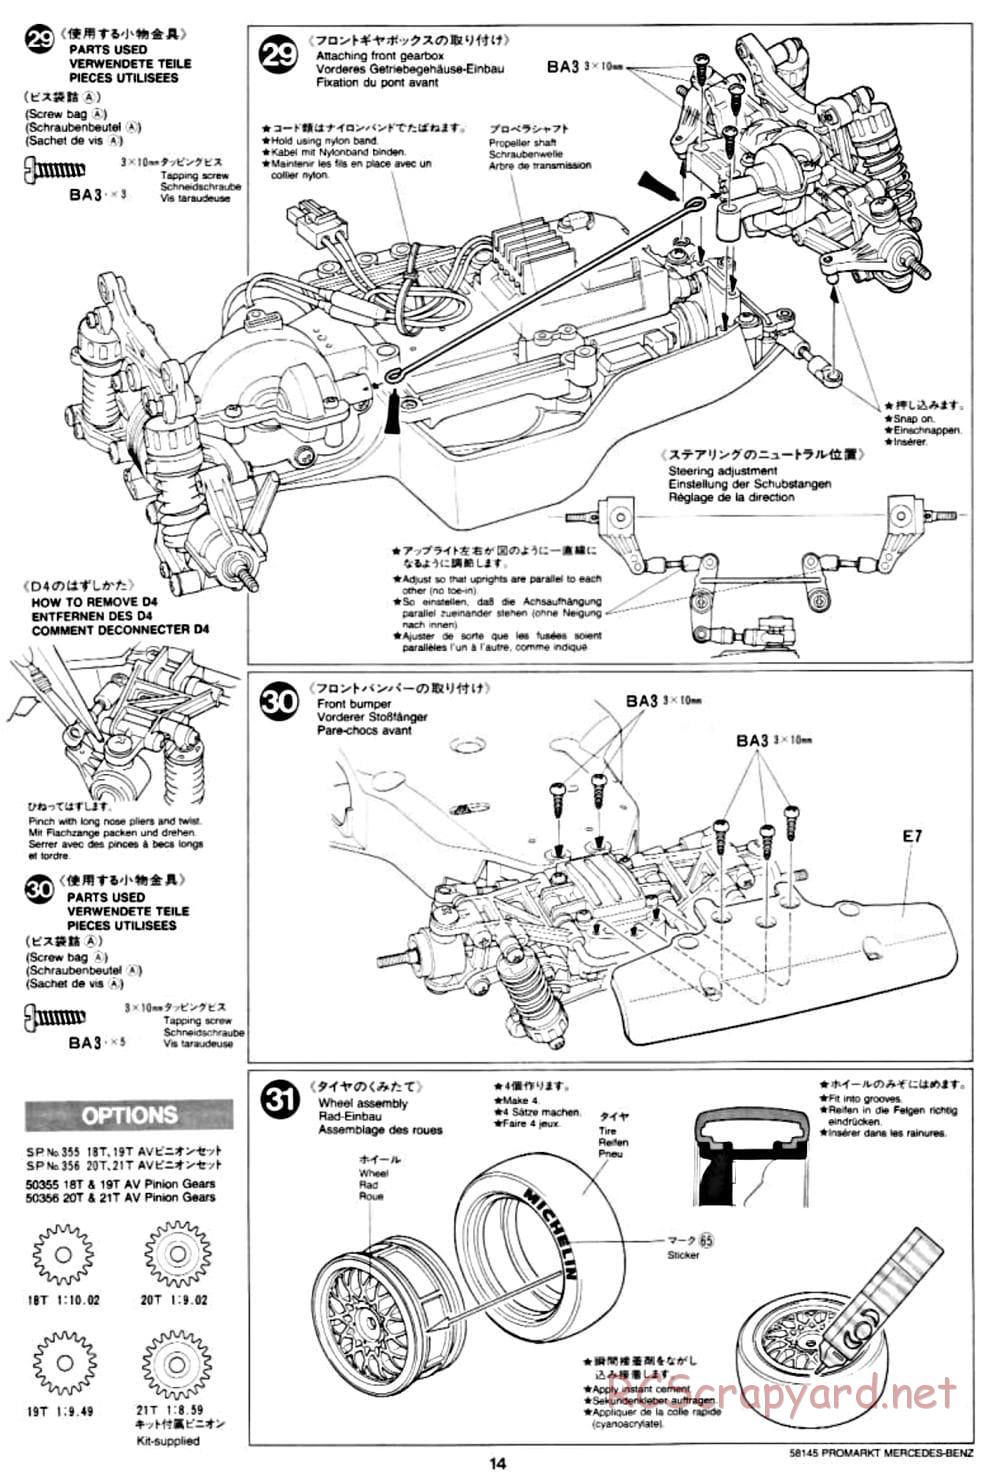 Tamiya - ProMarkt-Zakspeed AMG Mercedes C-Class DTM - TA-02 Chassis - Manual - Page 14